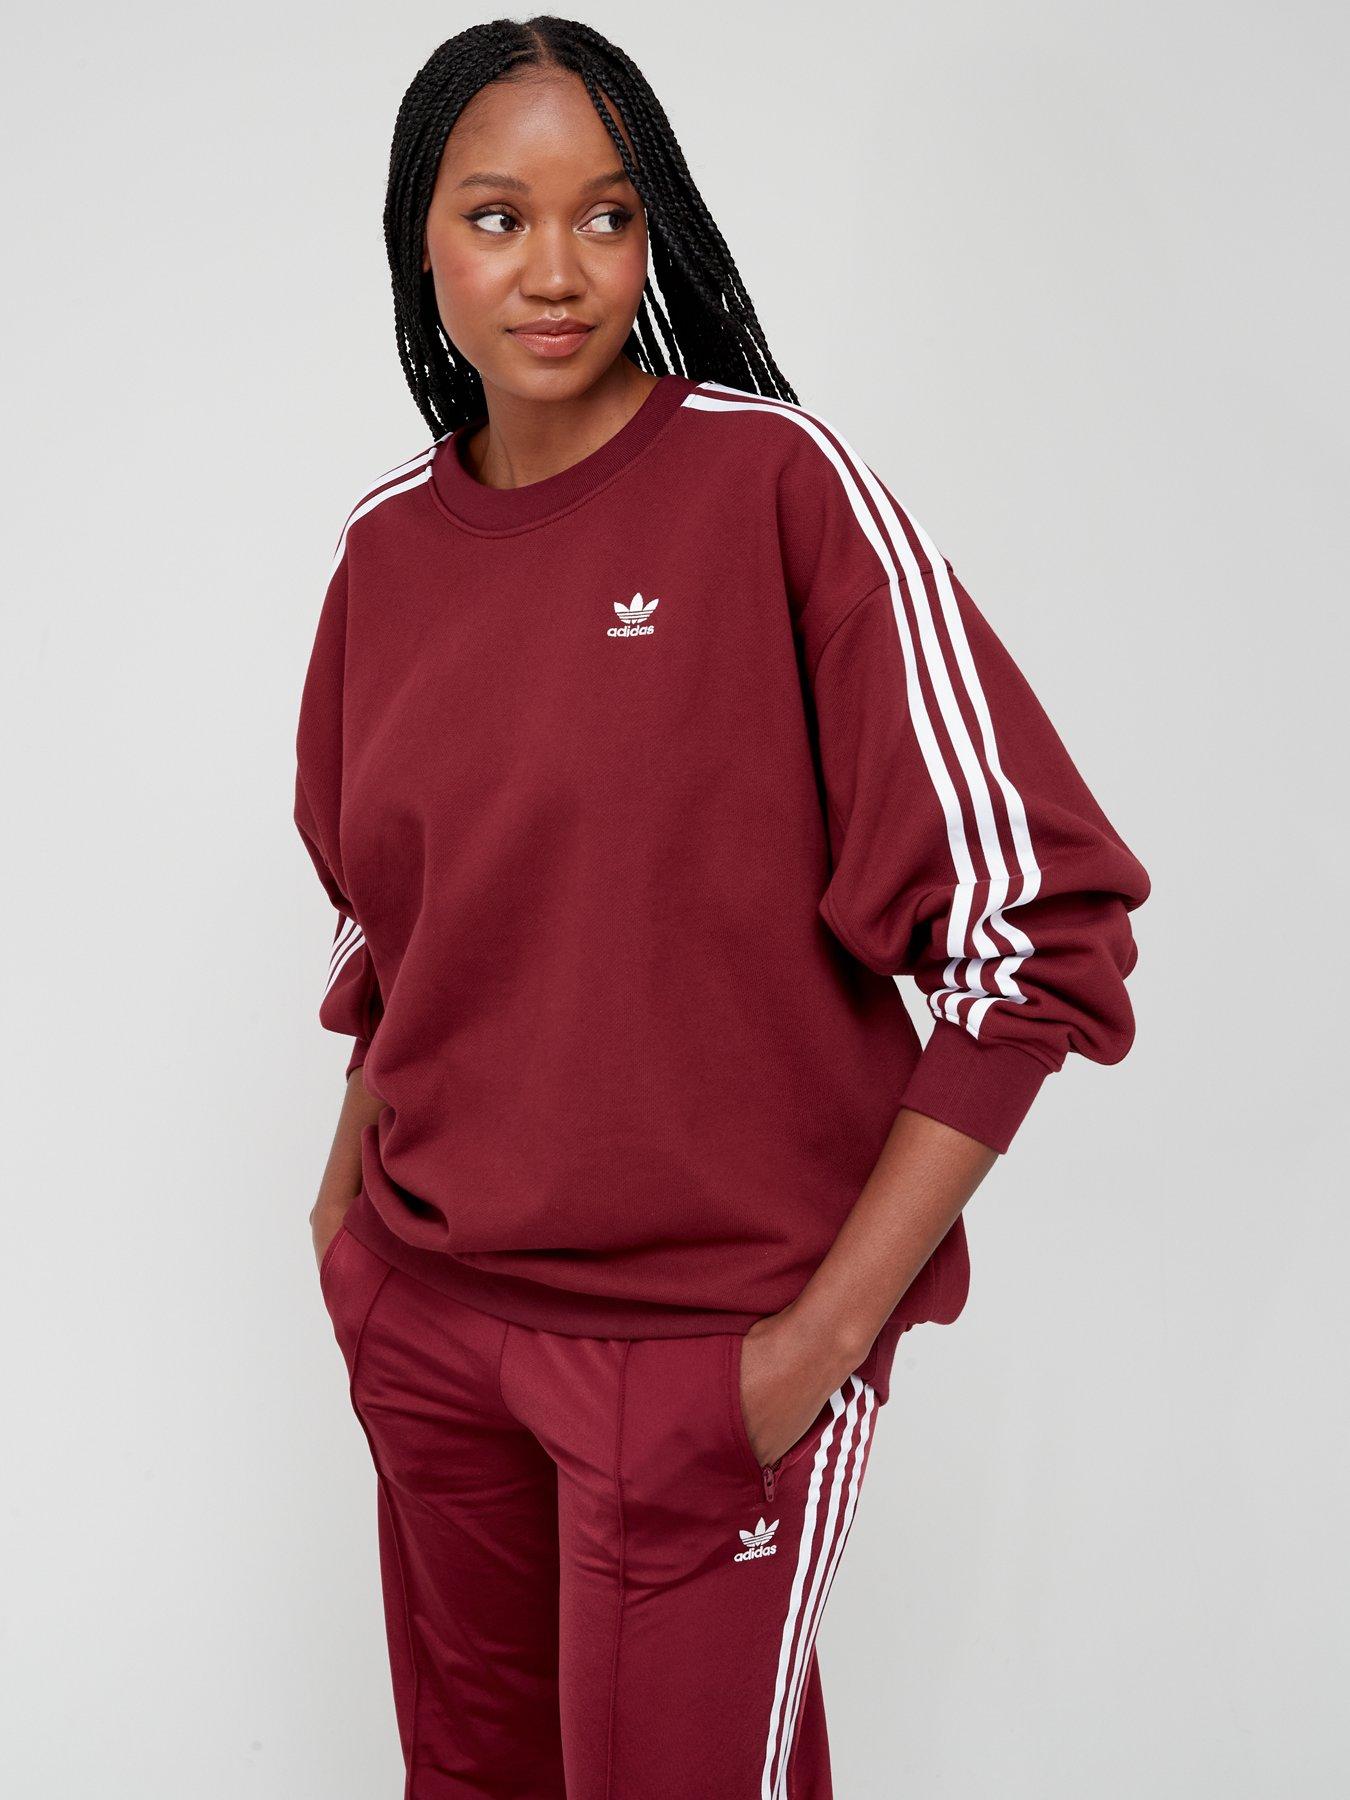 voor de hand liggend fusie knijpen Womens sports clothing | Sports & leisure | Adidas originals |  www.littlewoods.com